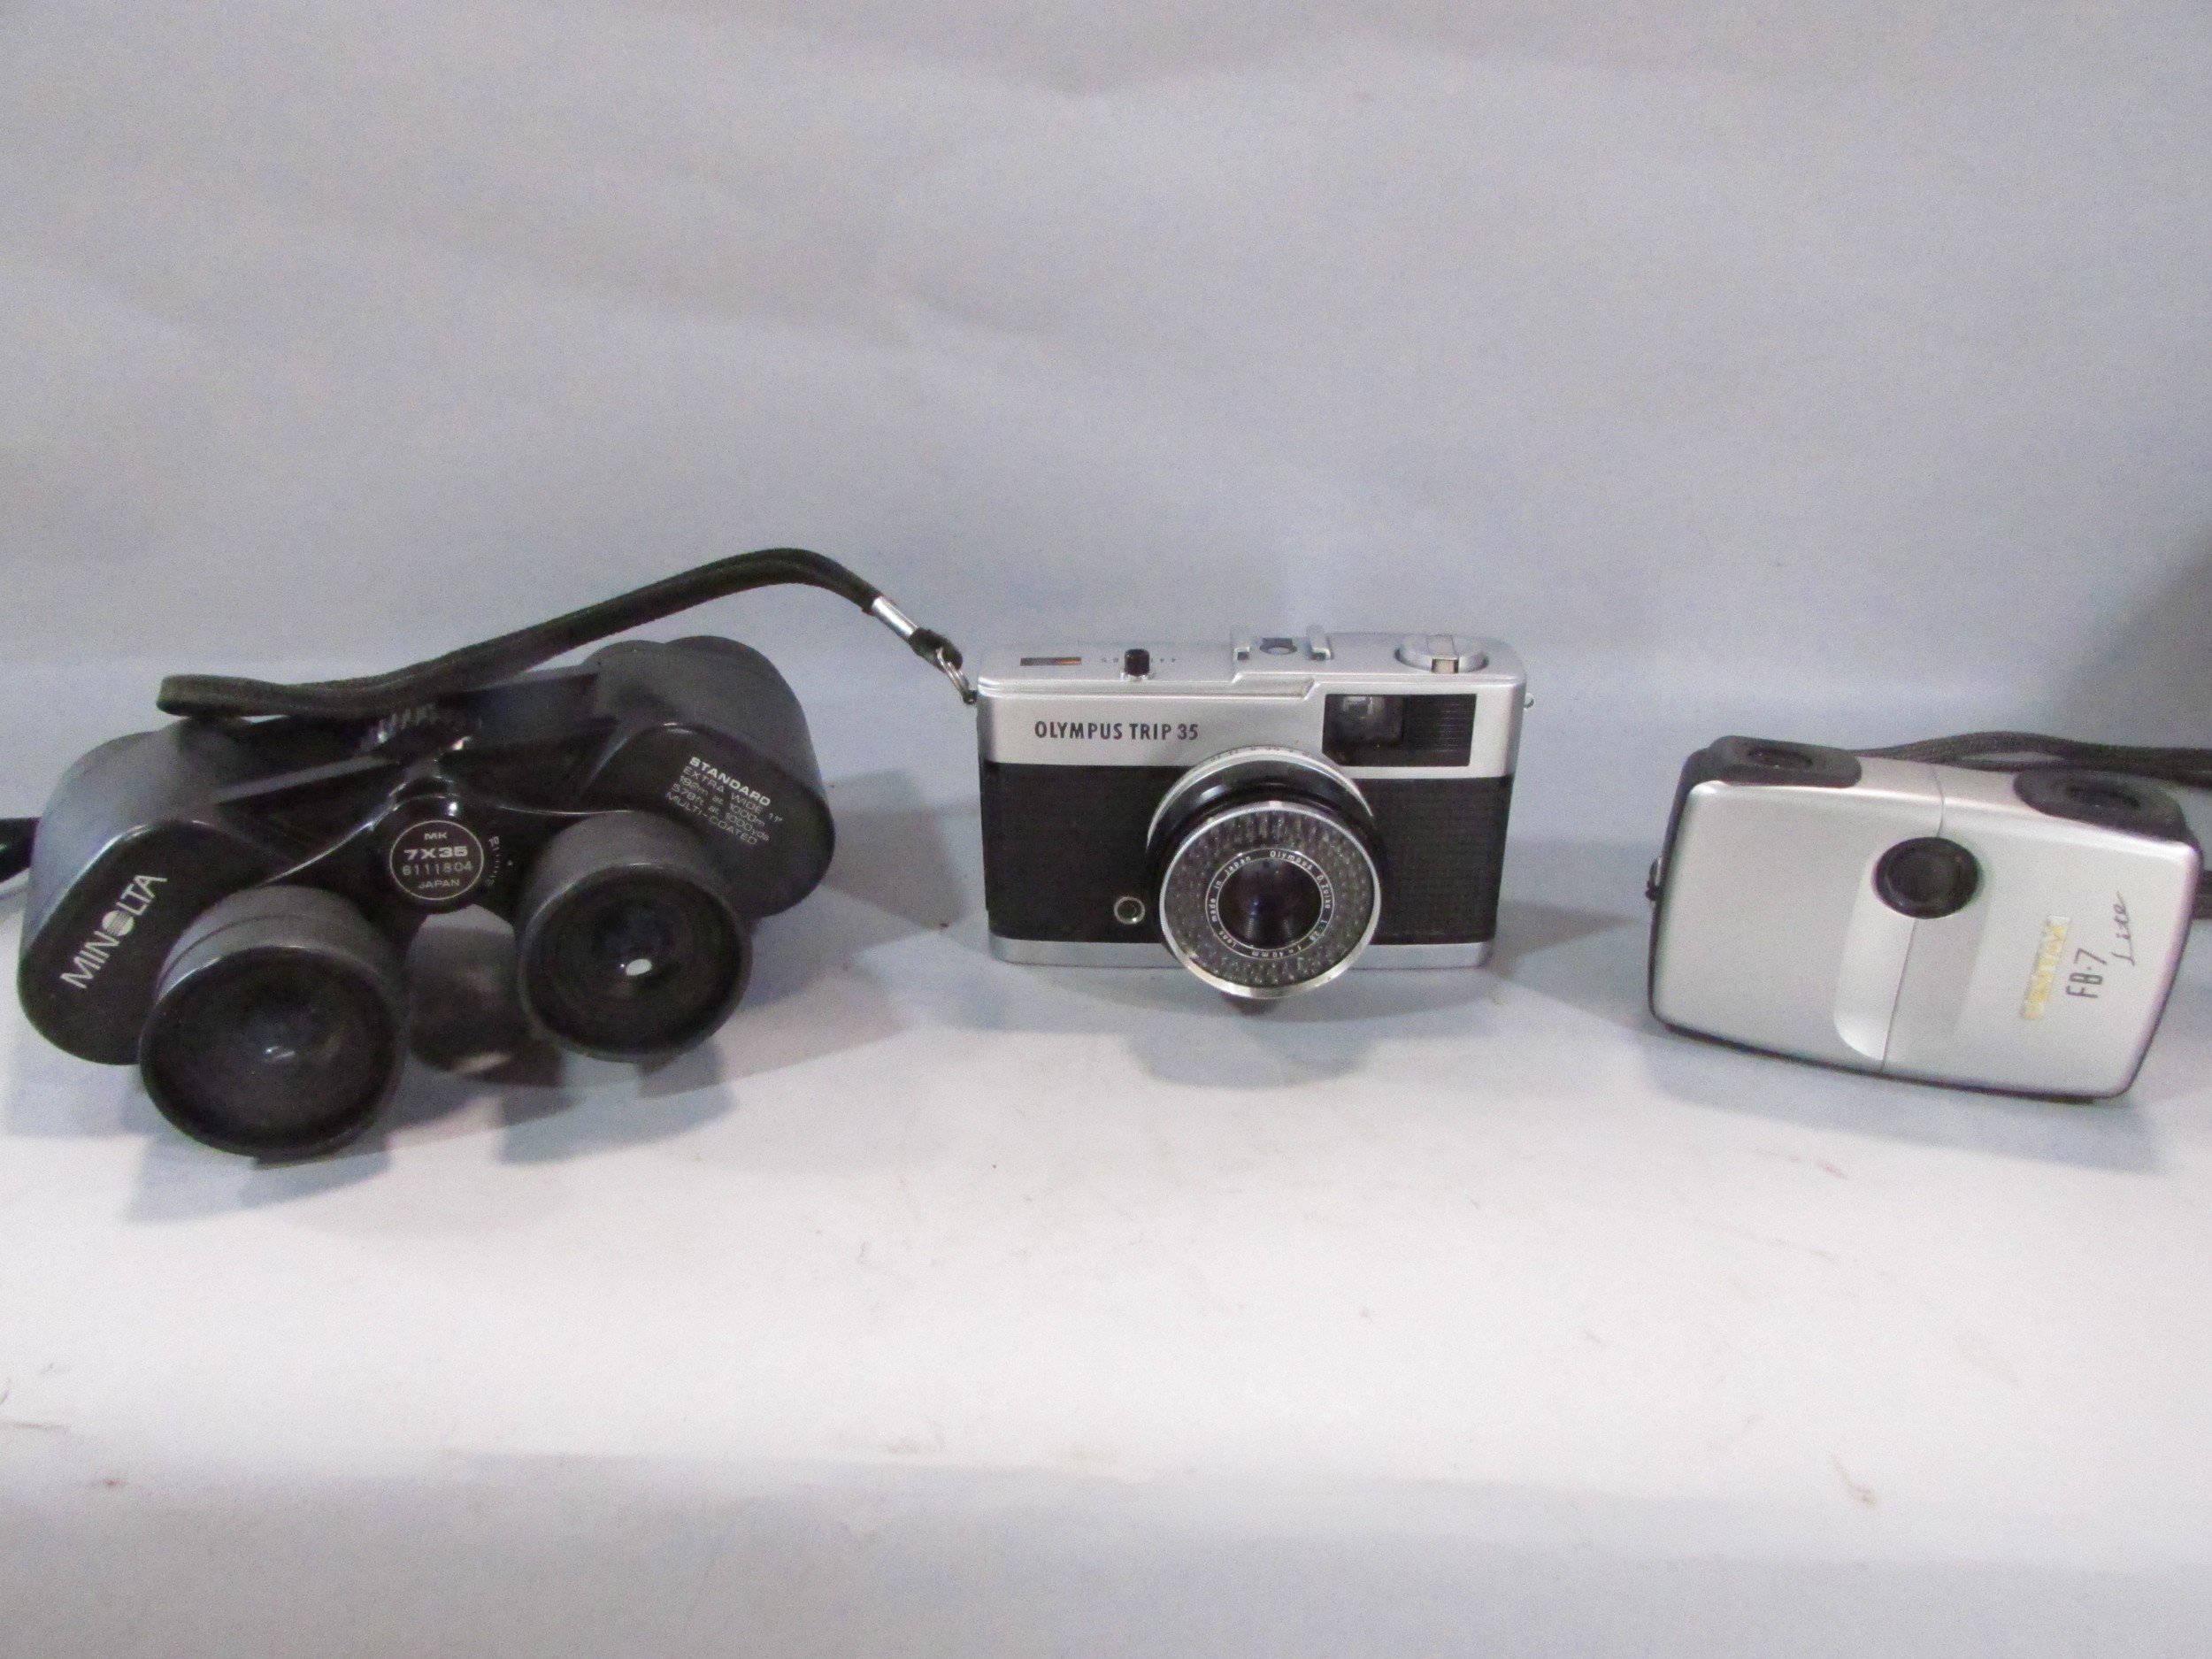 A quantity of photographic equipment including a Minolta 200 MXI camera, a Minolta flash and lens, - Image 2 of 7